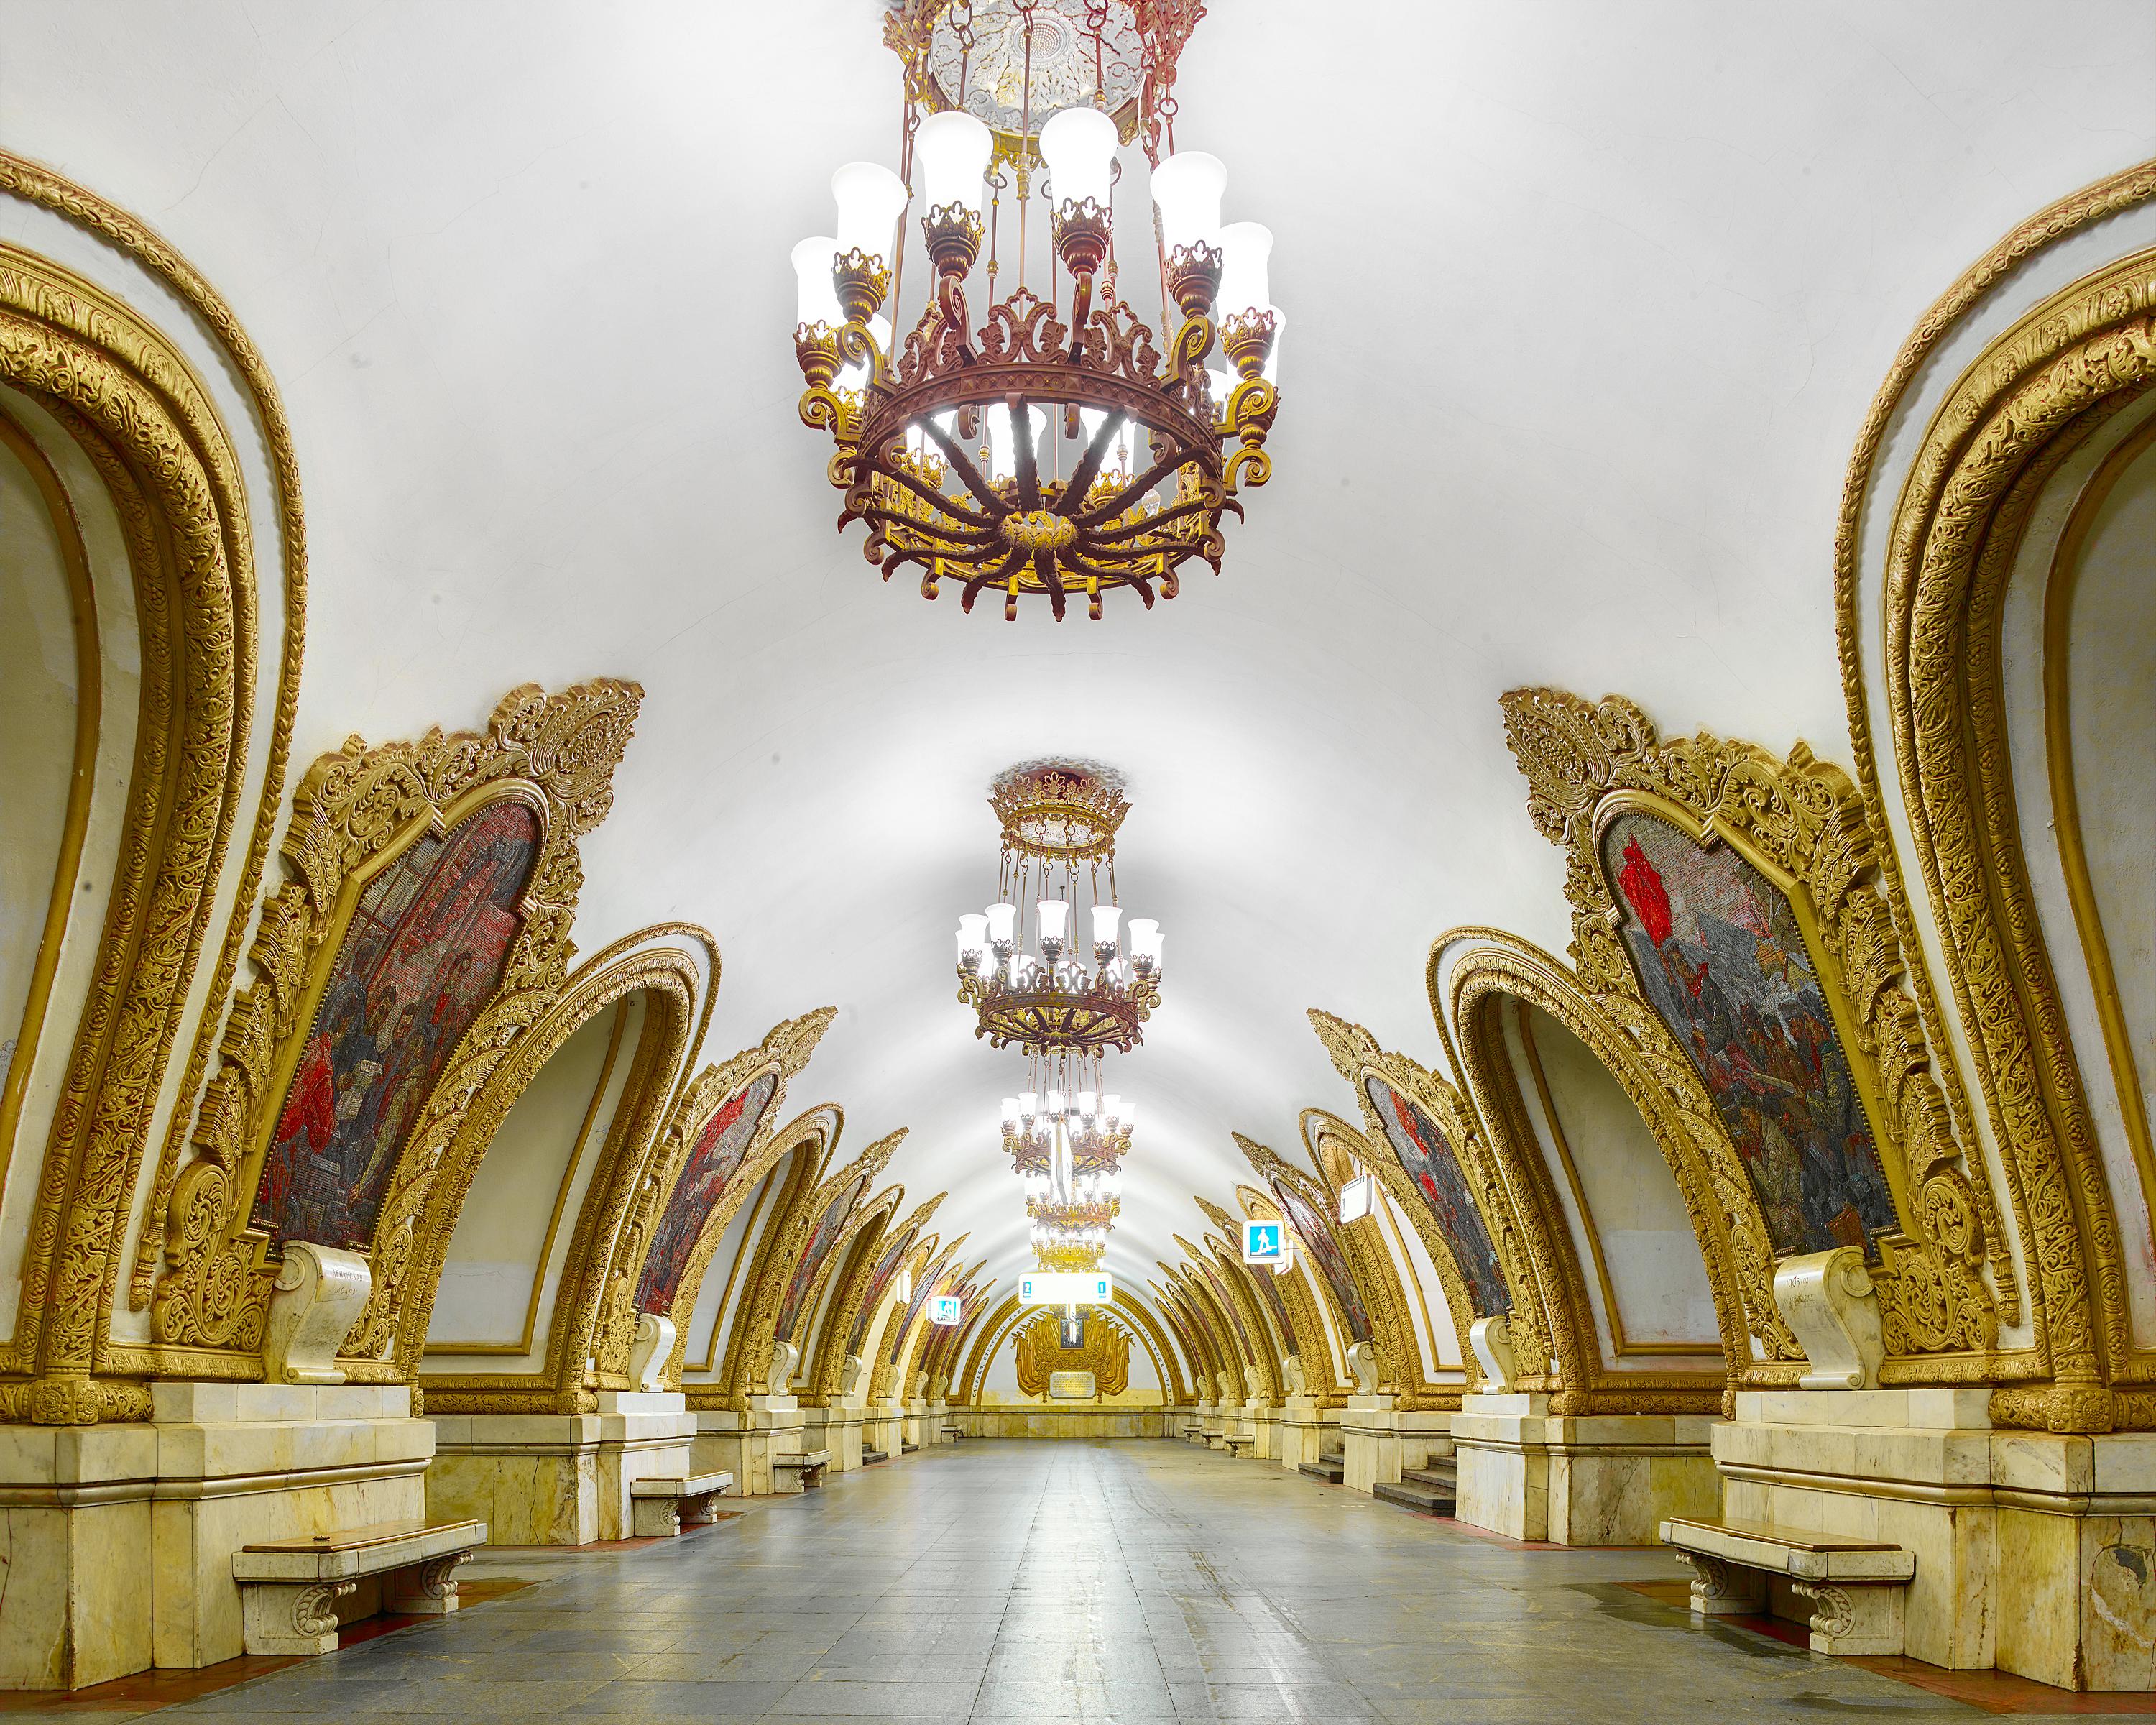 David Burdeny Interior Print - Kiyevsskaya Metro Station II, Moscow, Russia